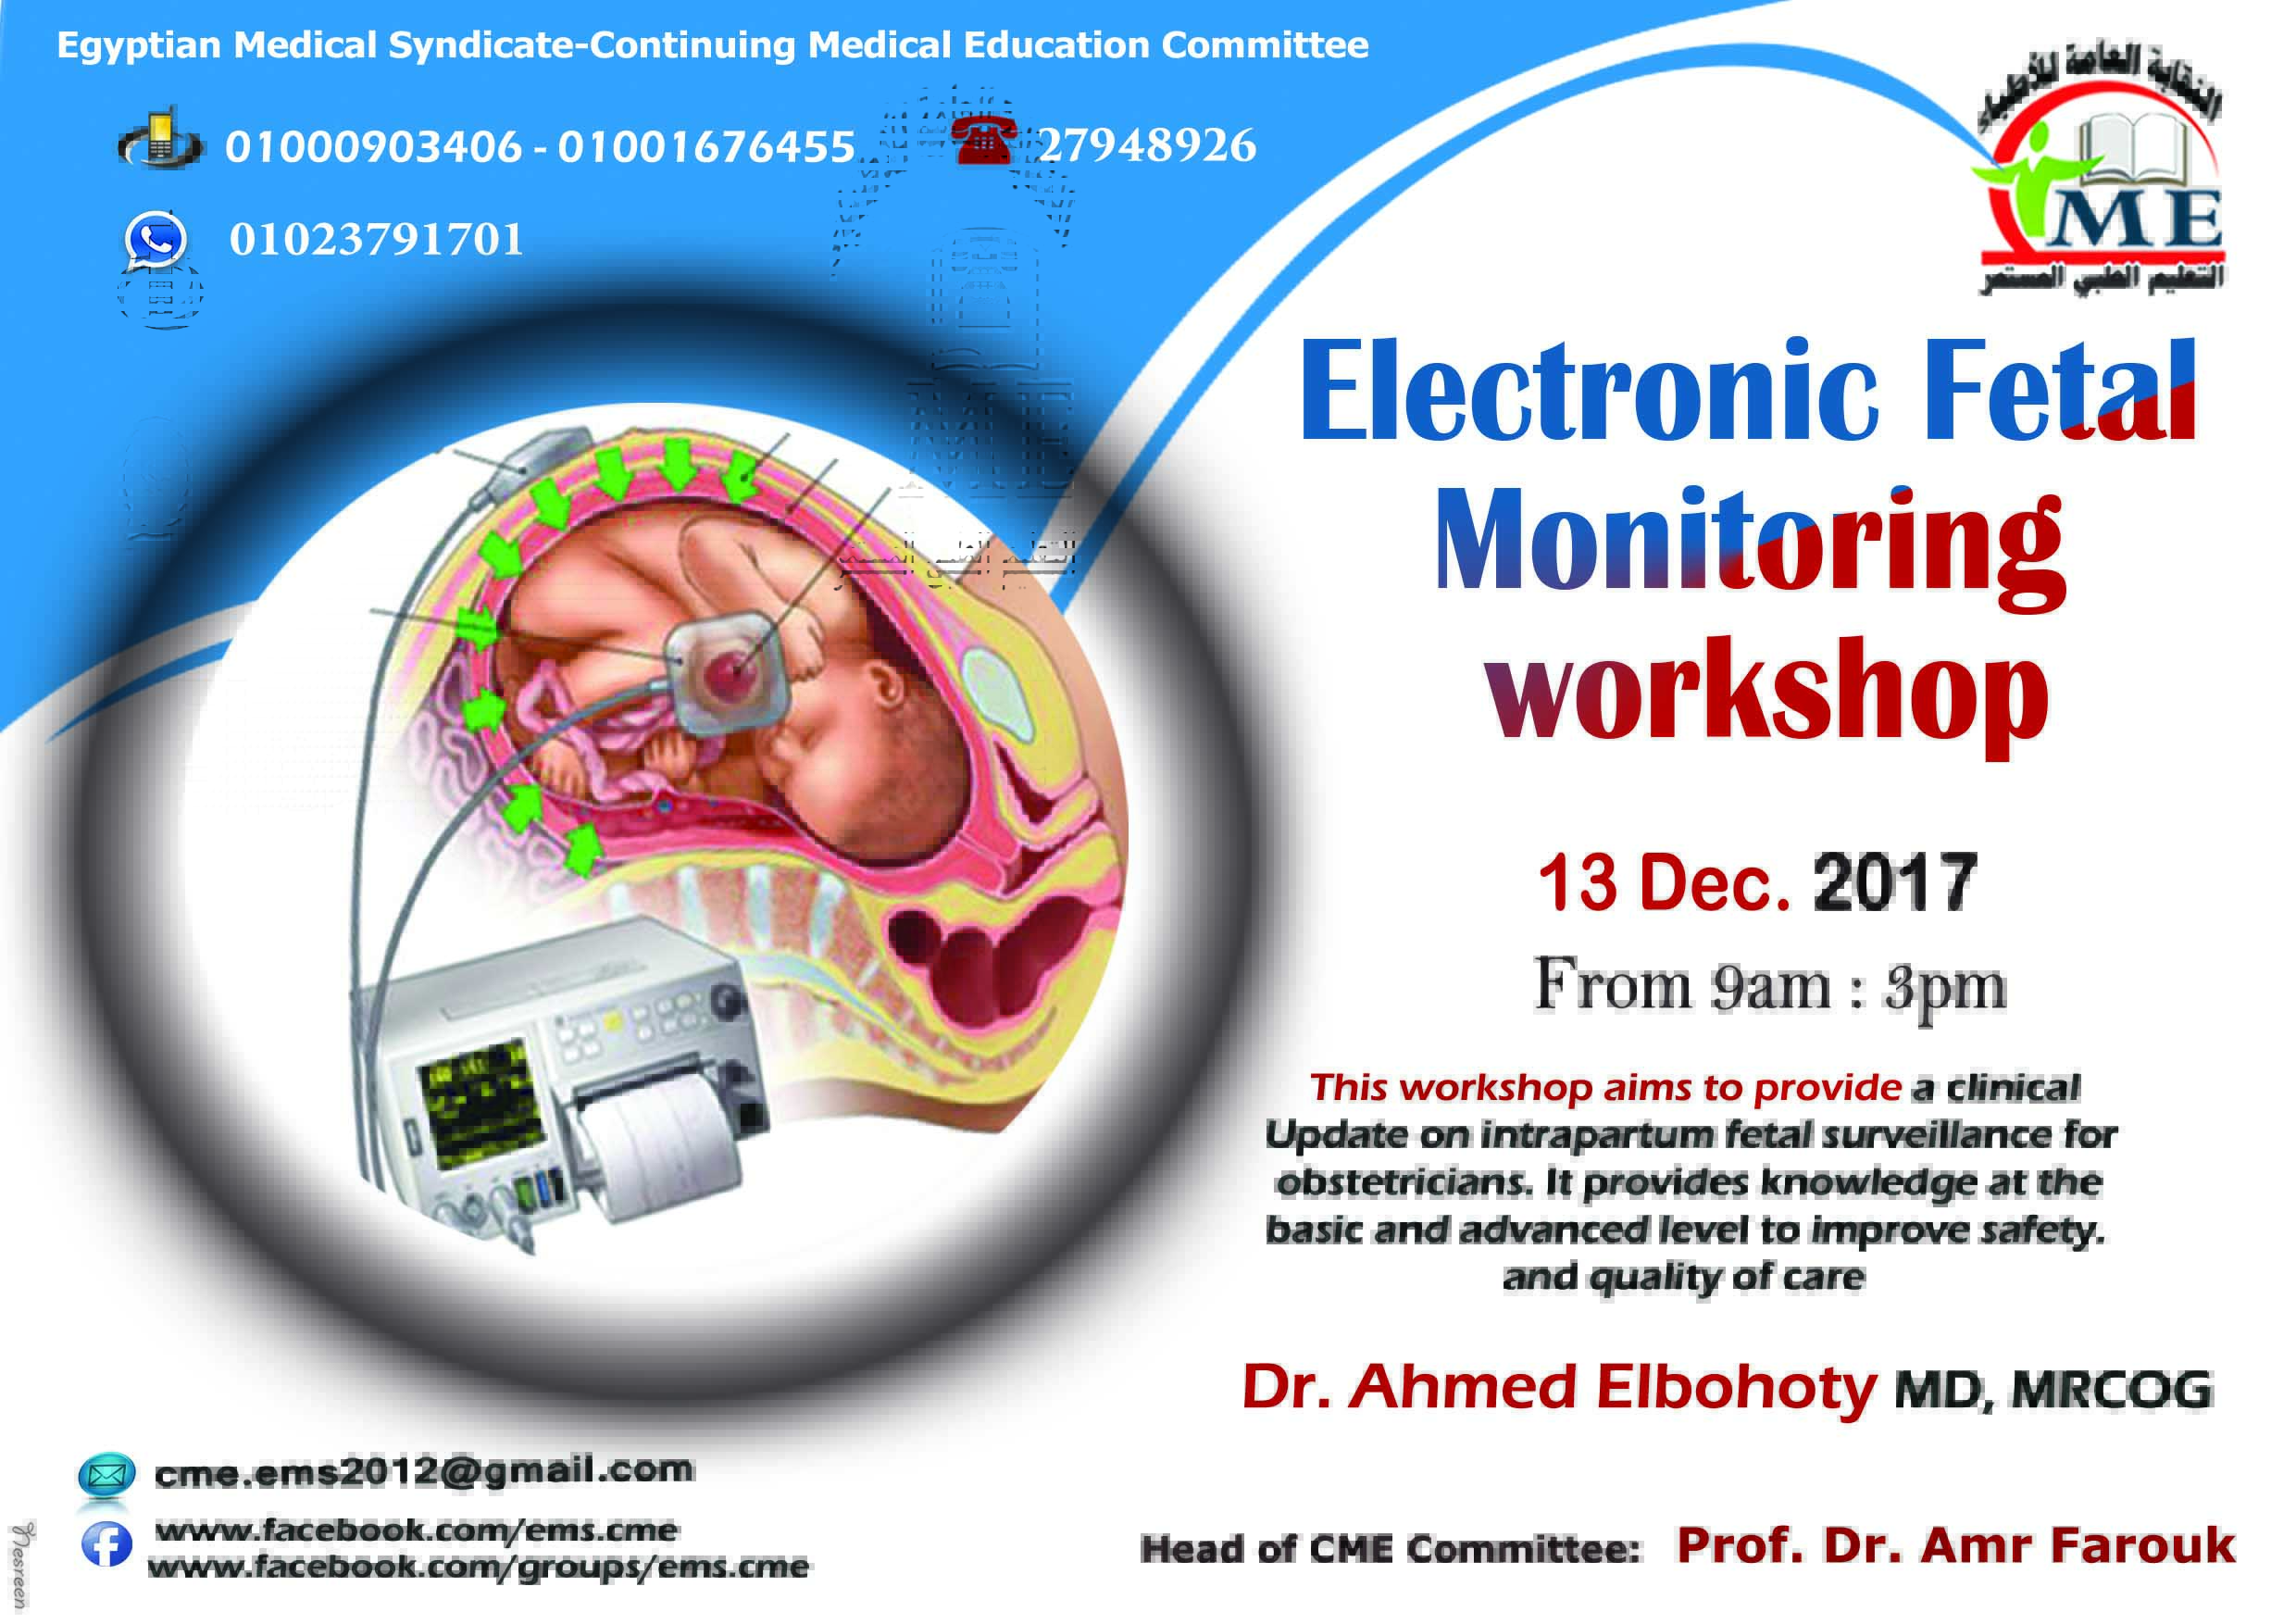 Electronic Fetal Monitoring workshop